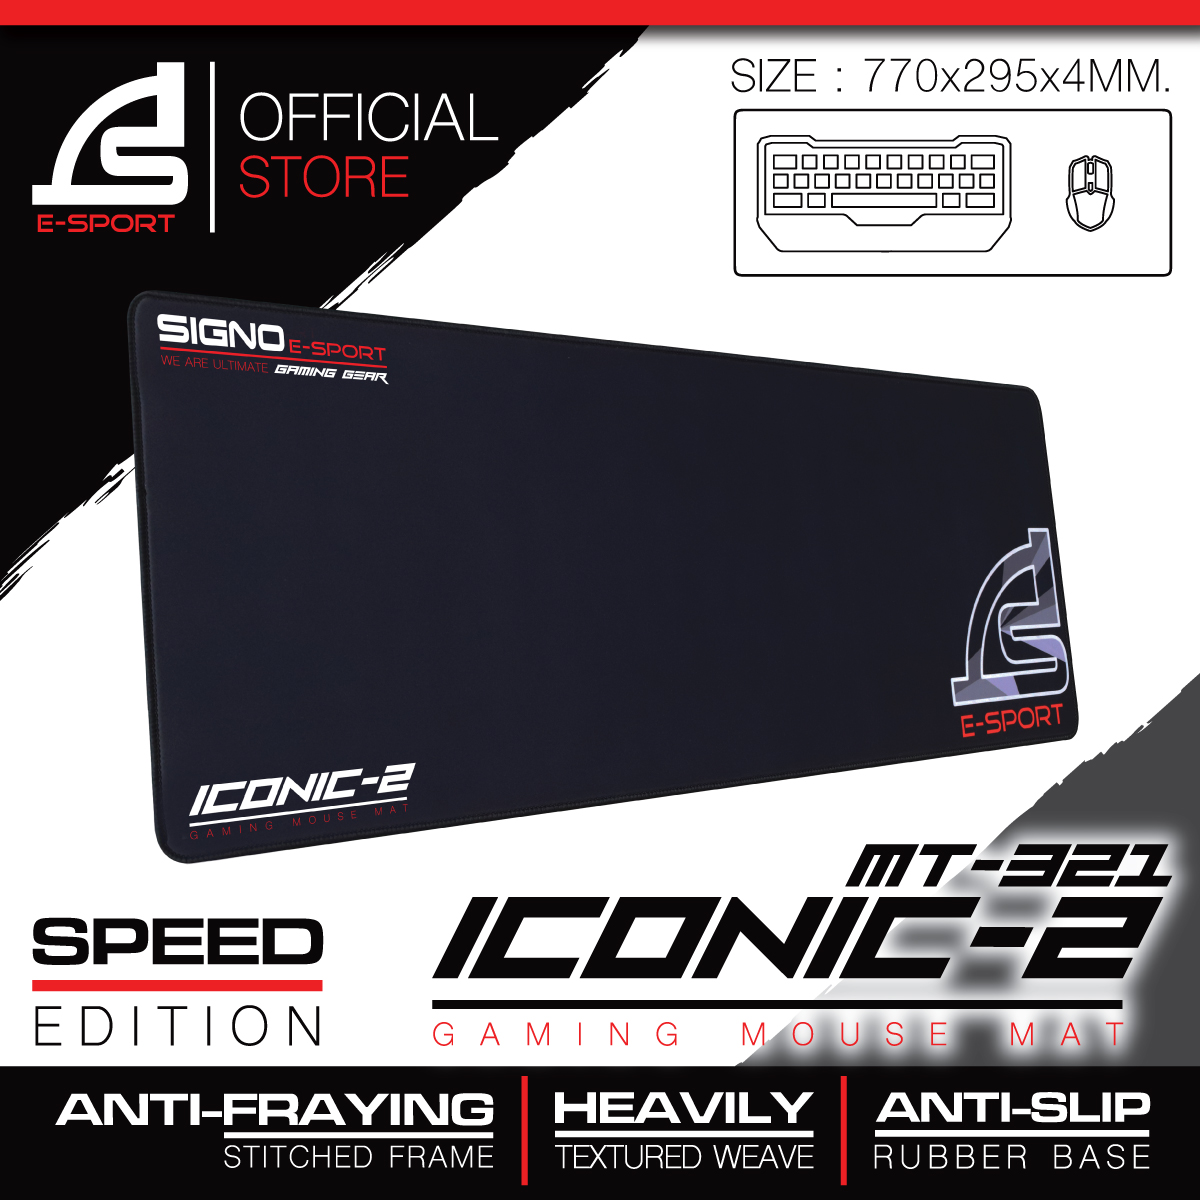 Signo E-Sport Iconic-2 Gaming Mouse Mat รุ่น Mt-321 (speed Edition) (แผ่นรองเมาส์ เกมส์มิ่ง). 